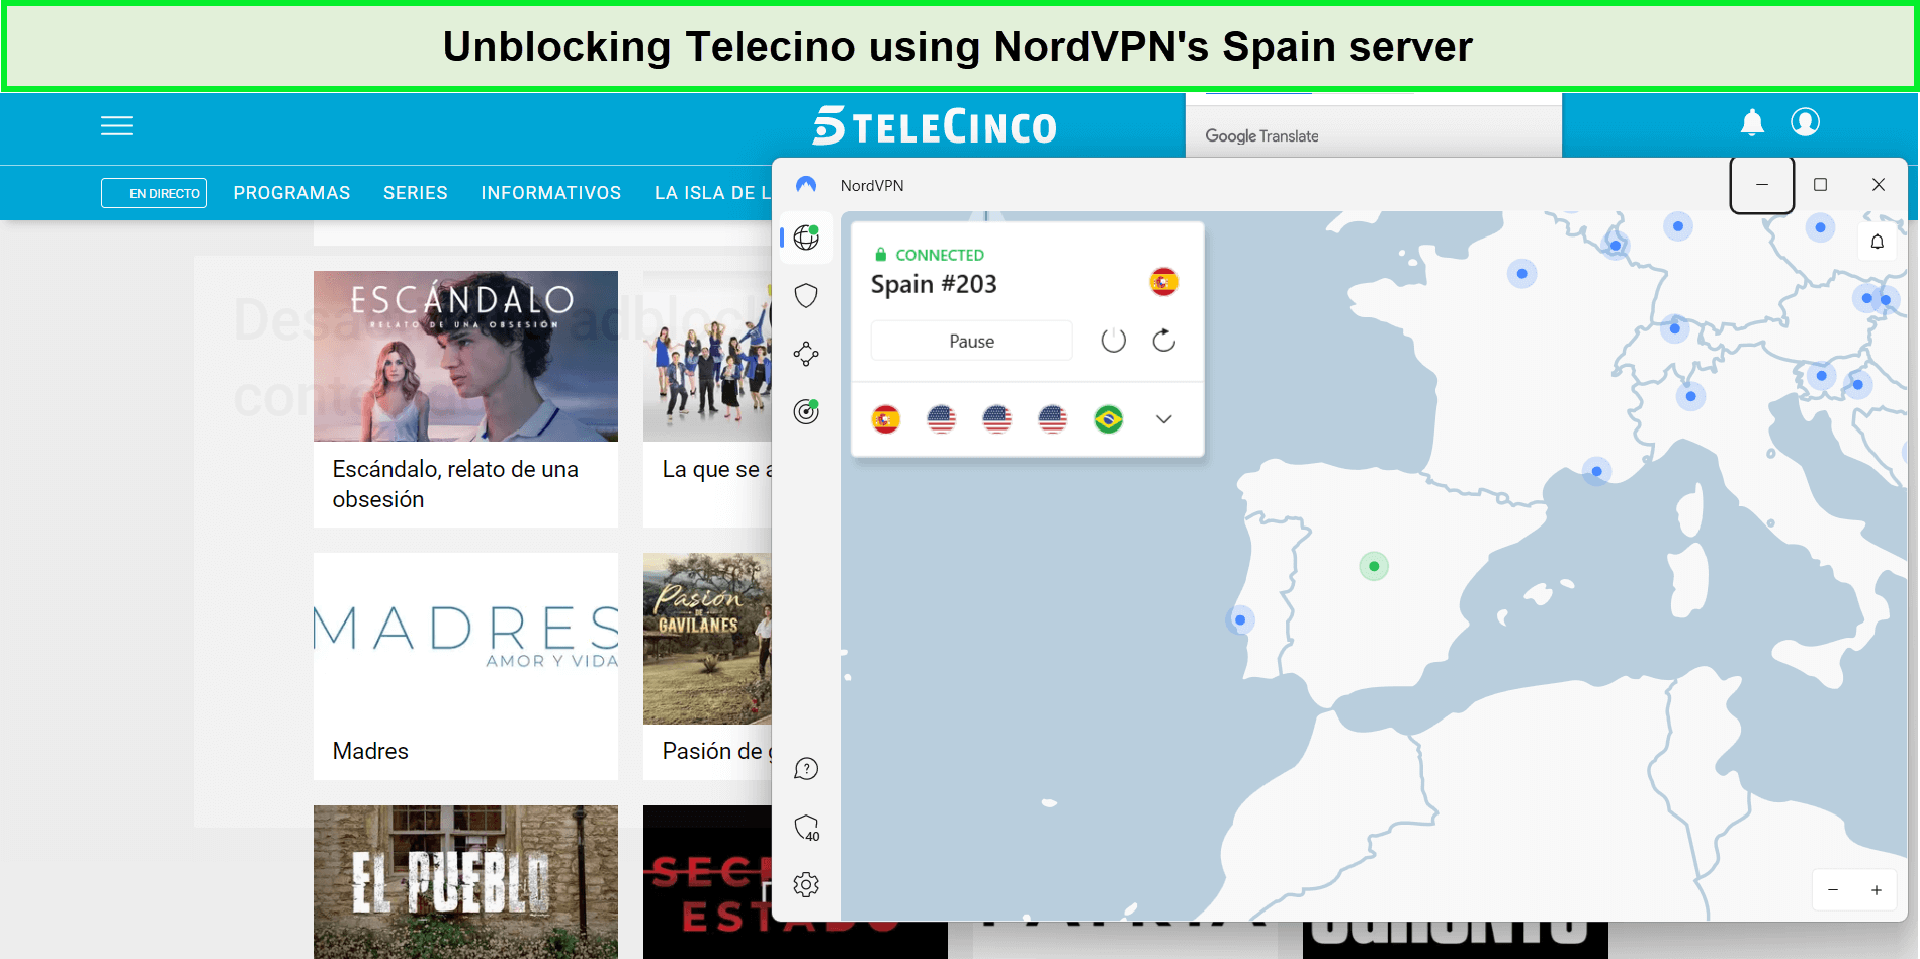 nordvpn-unblocked-telecinco-with-spanish-server-in-Japan